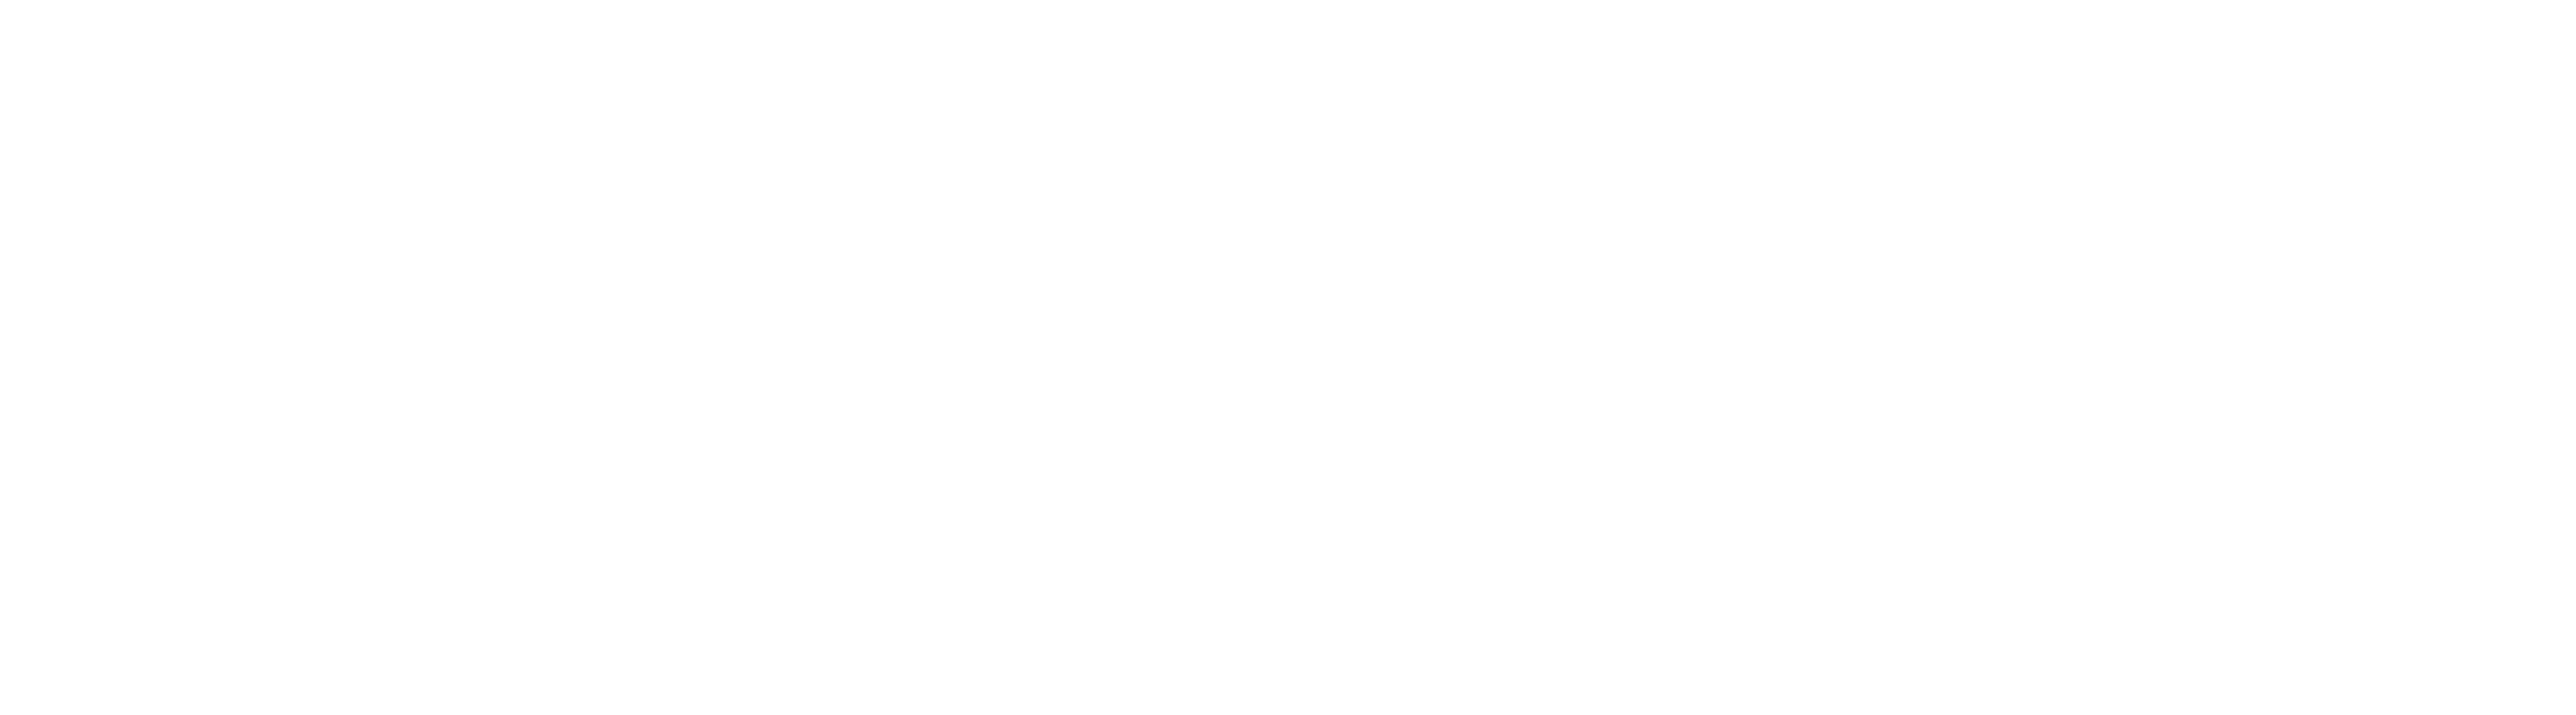 Skyline AI Logo Small Black